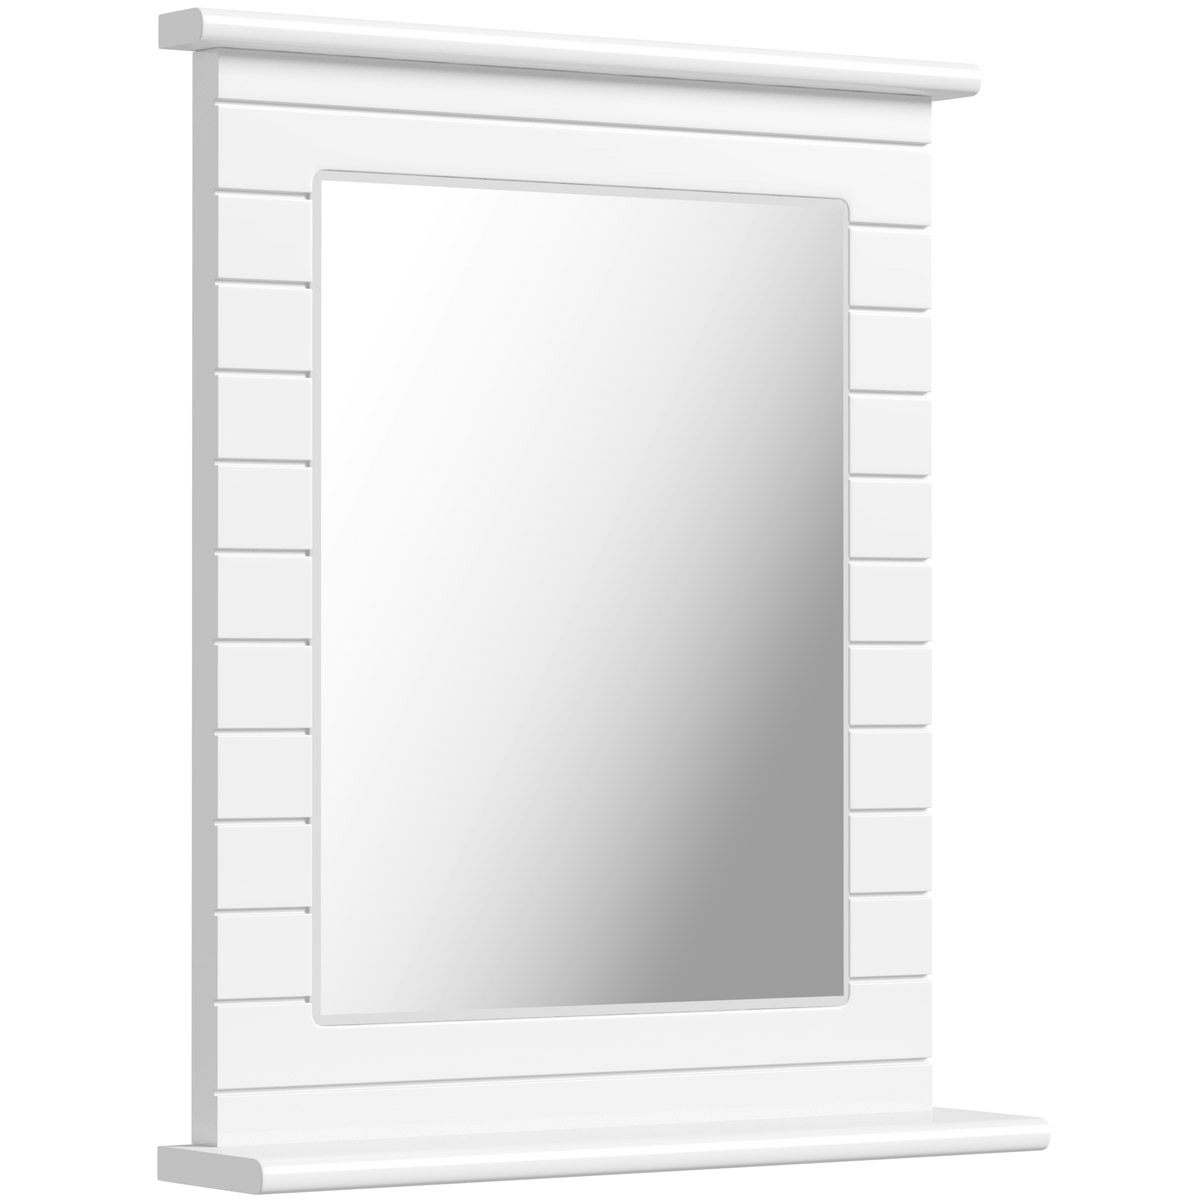 Accents Beachcomber white rectangular mirror